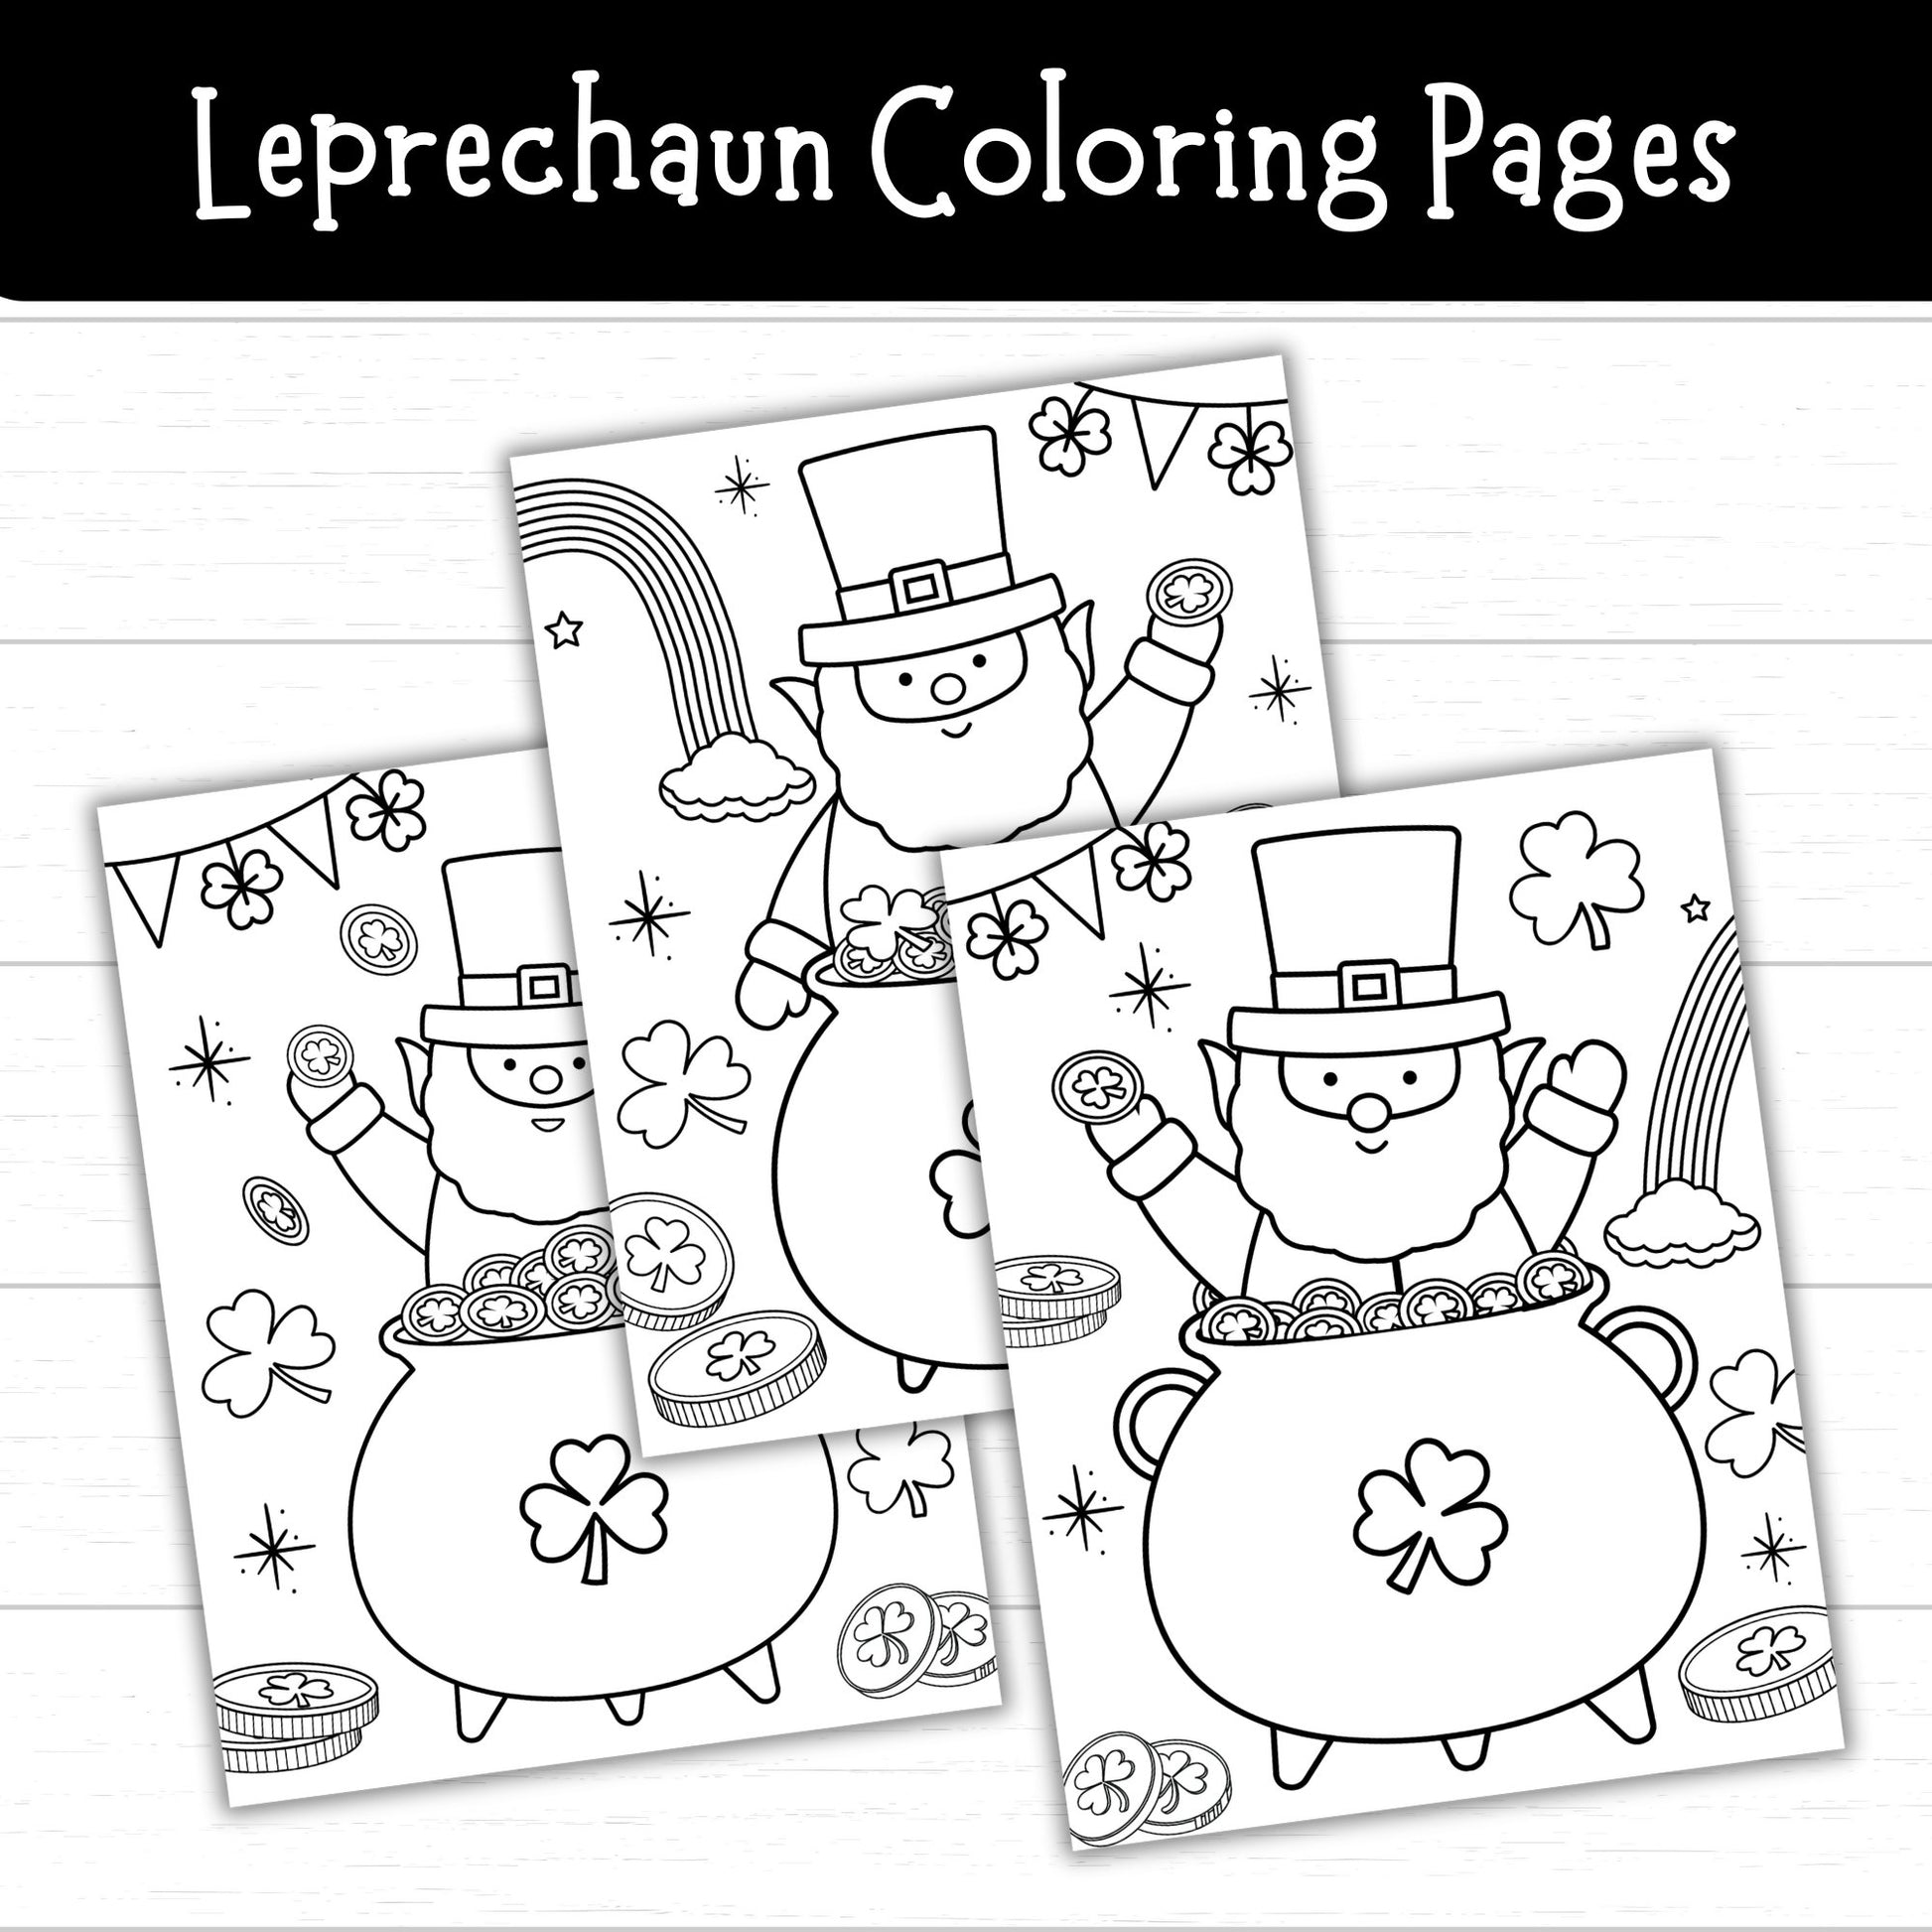 Leprechaun Coloring Pages, Printable Leprechaun Activities, St. Patrick's Day Printables for Kids, March Activity, Leprechaun Coloring Book